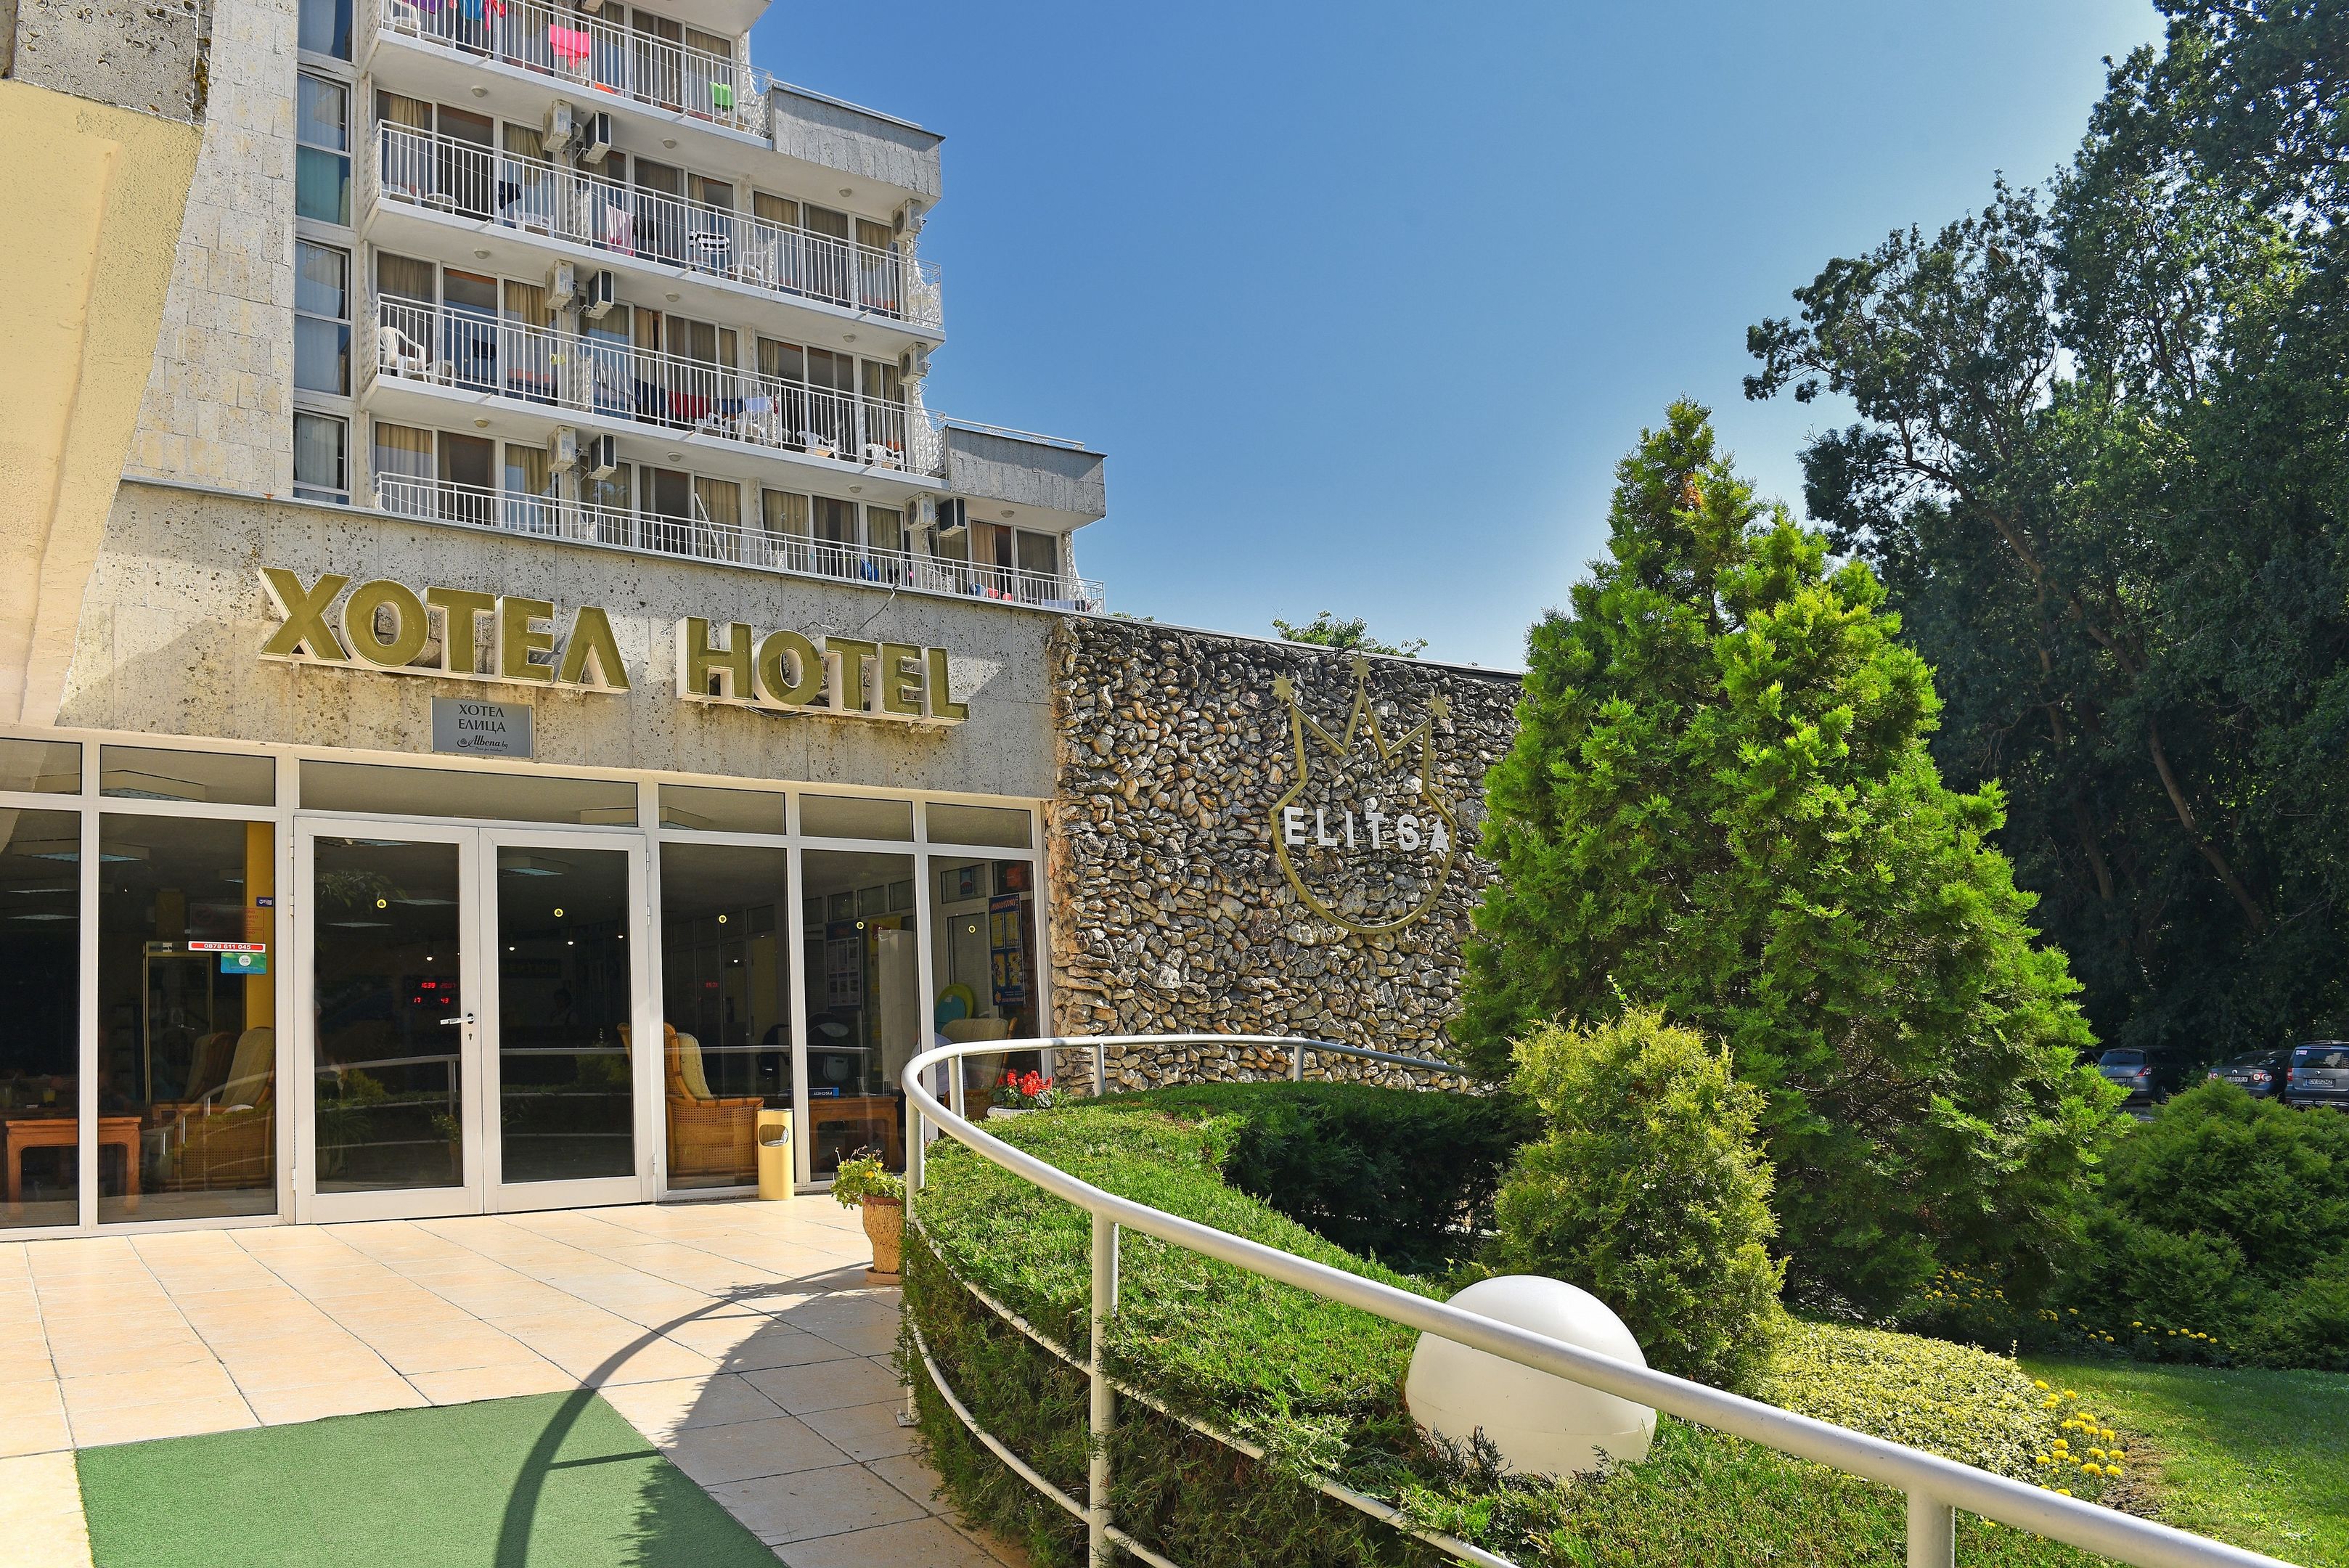 Hotel Elitsa